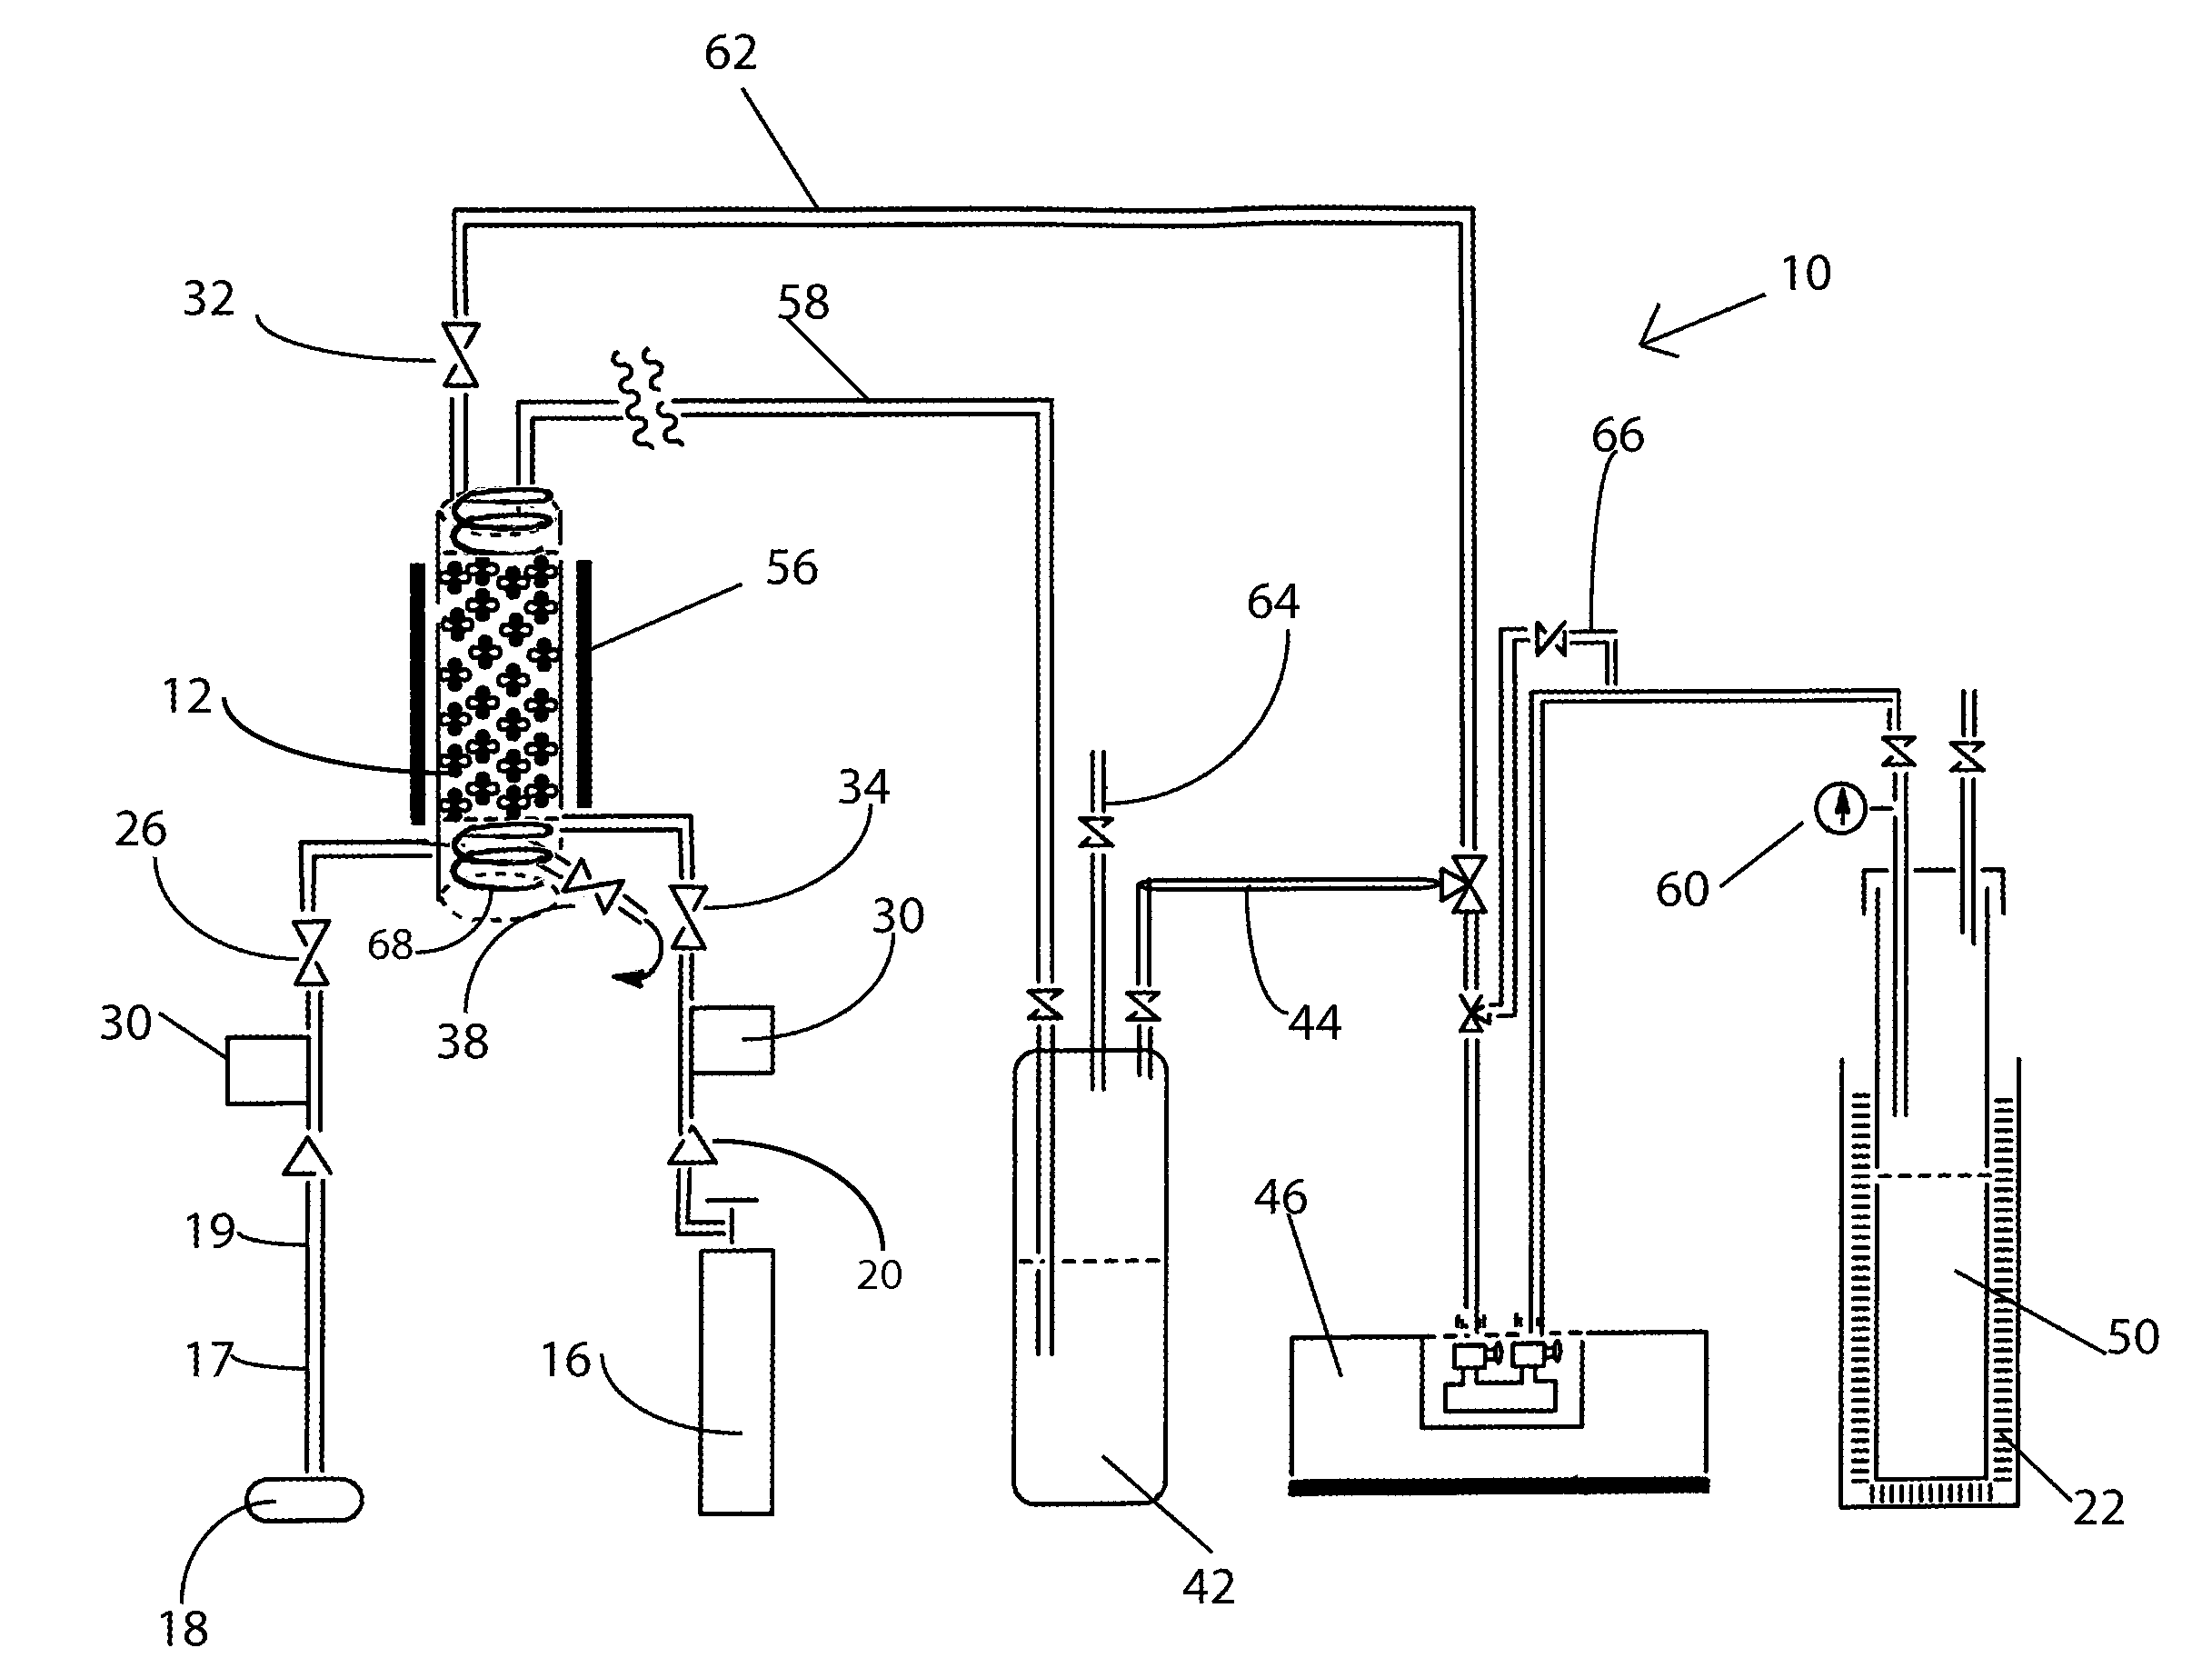 Method for production of sulfur hexafluoride from sulfur tetrafluoride